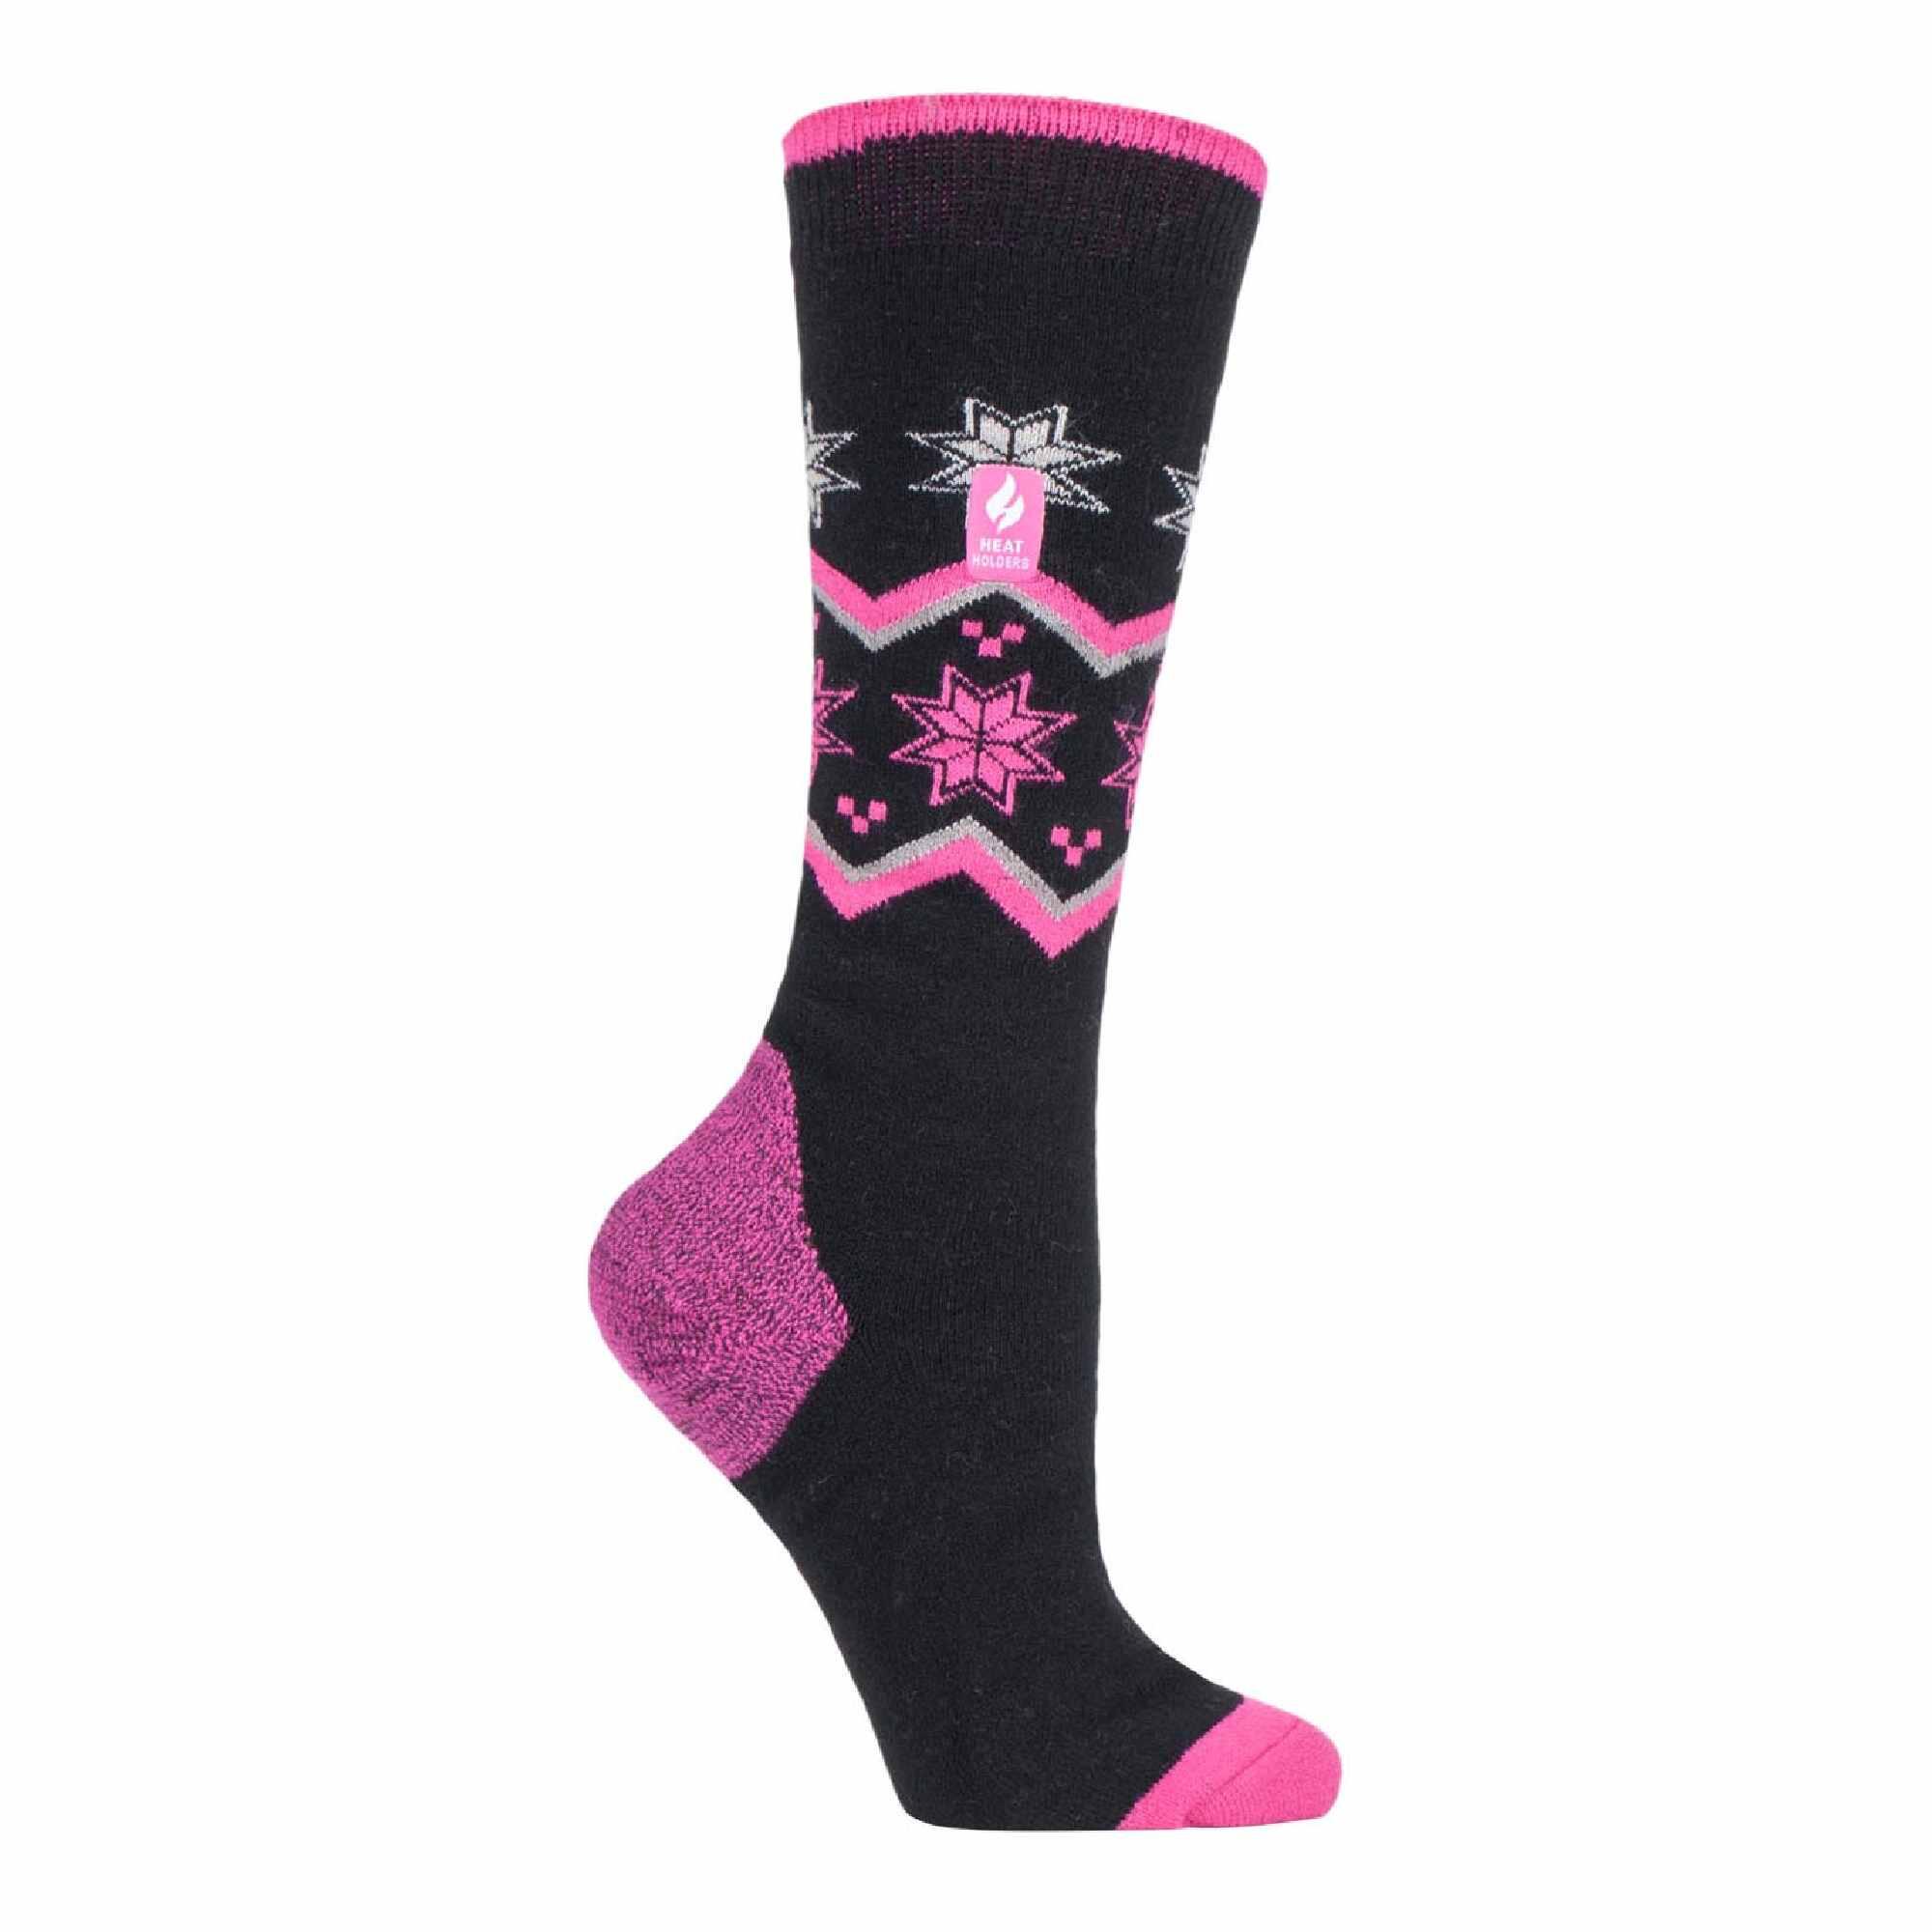 Ladies Thin Lightweight Warm Thermal Winter Long Knee High Ski Socks 1/4